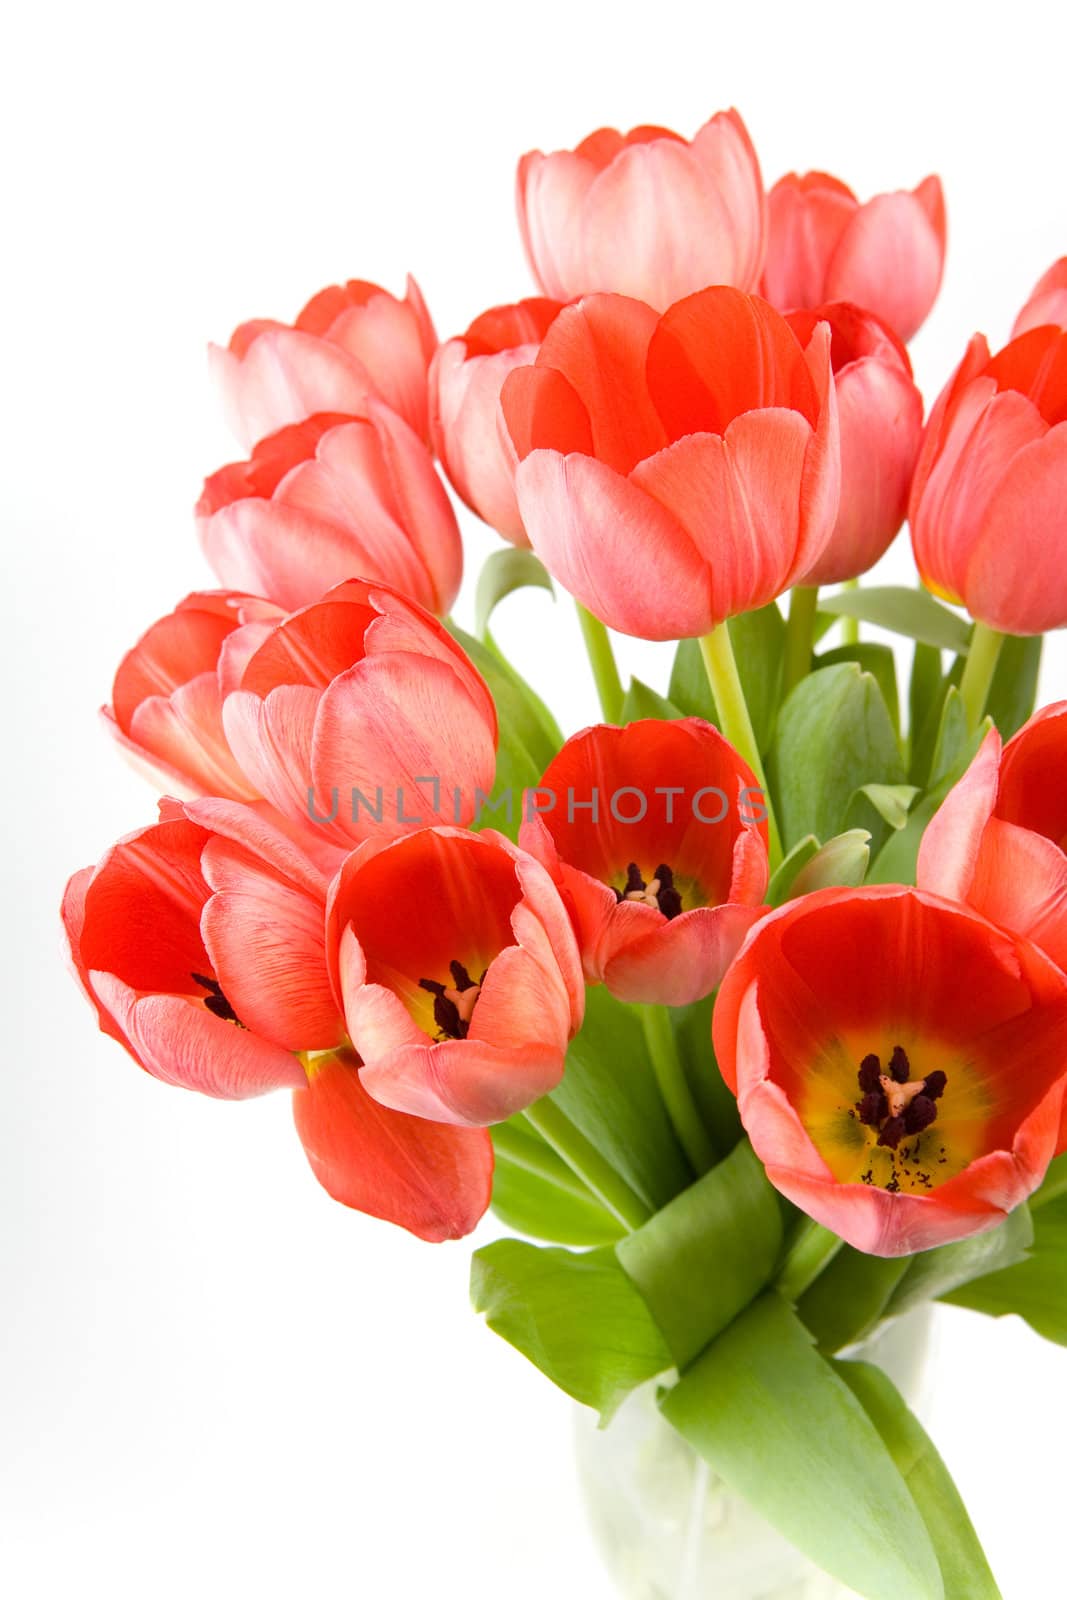 Tulips by Luminis